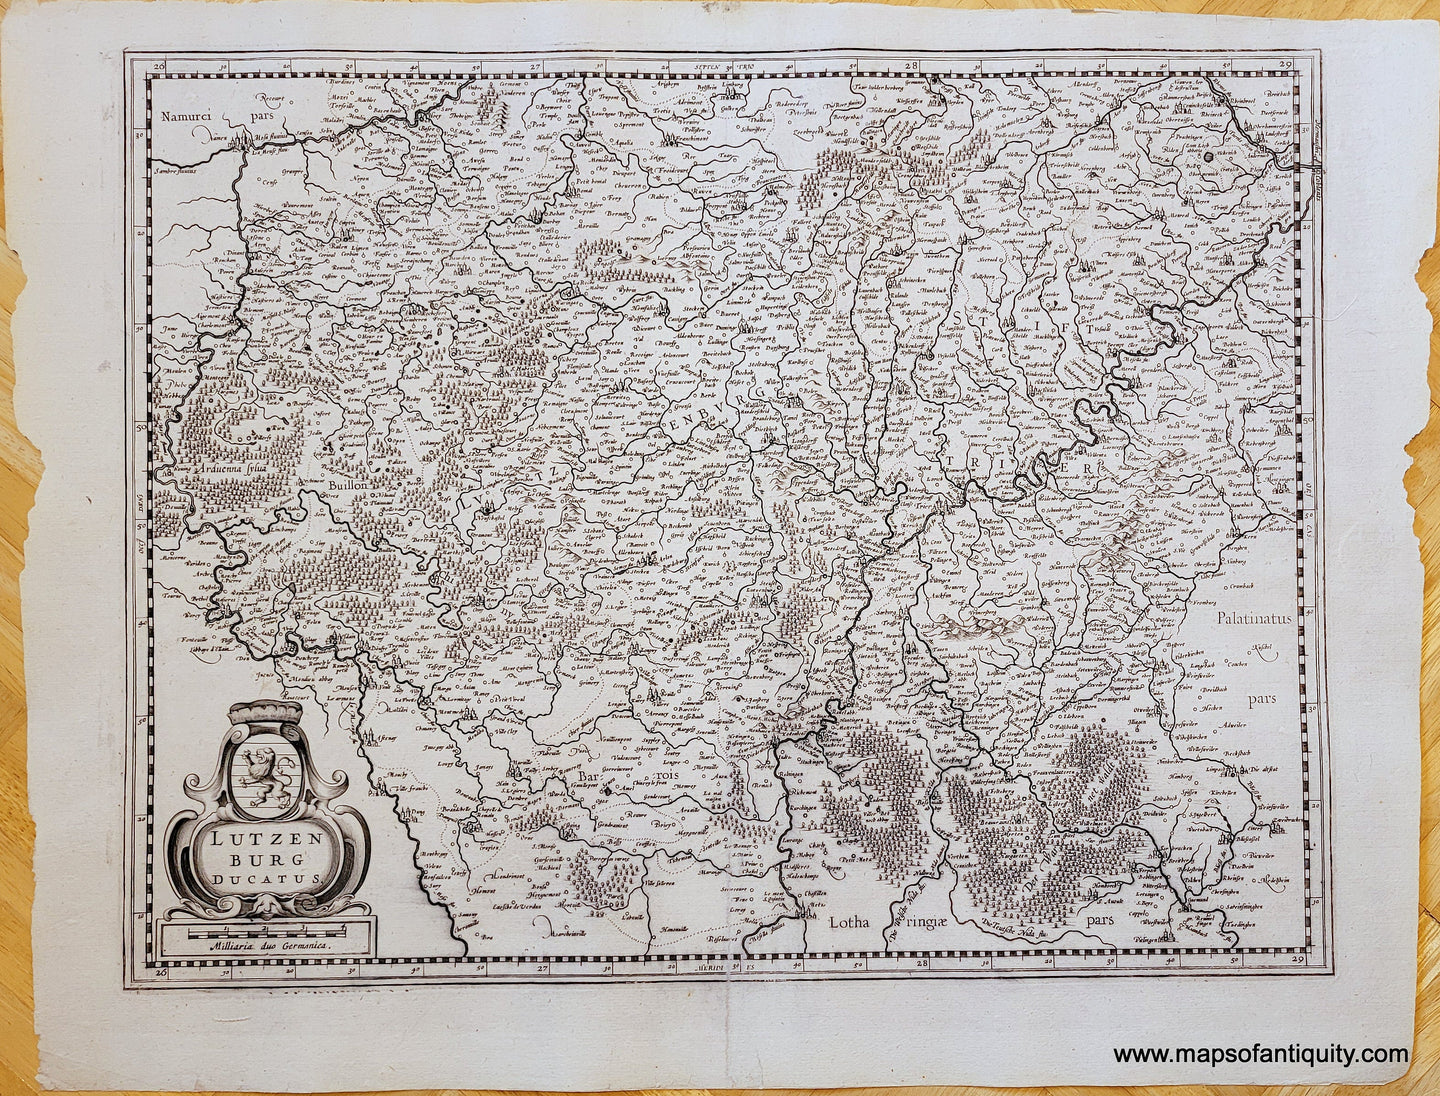 Genuine-Antique-Map-Luxembourg---Lutzenburg-Ducatus-1630s-Tavernier-Maps-Of-Antiquity